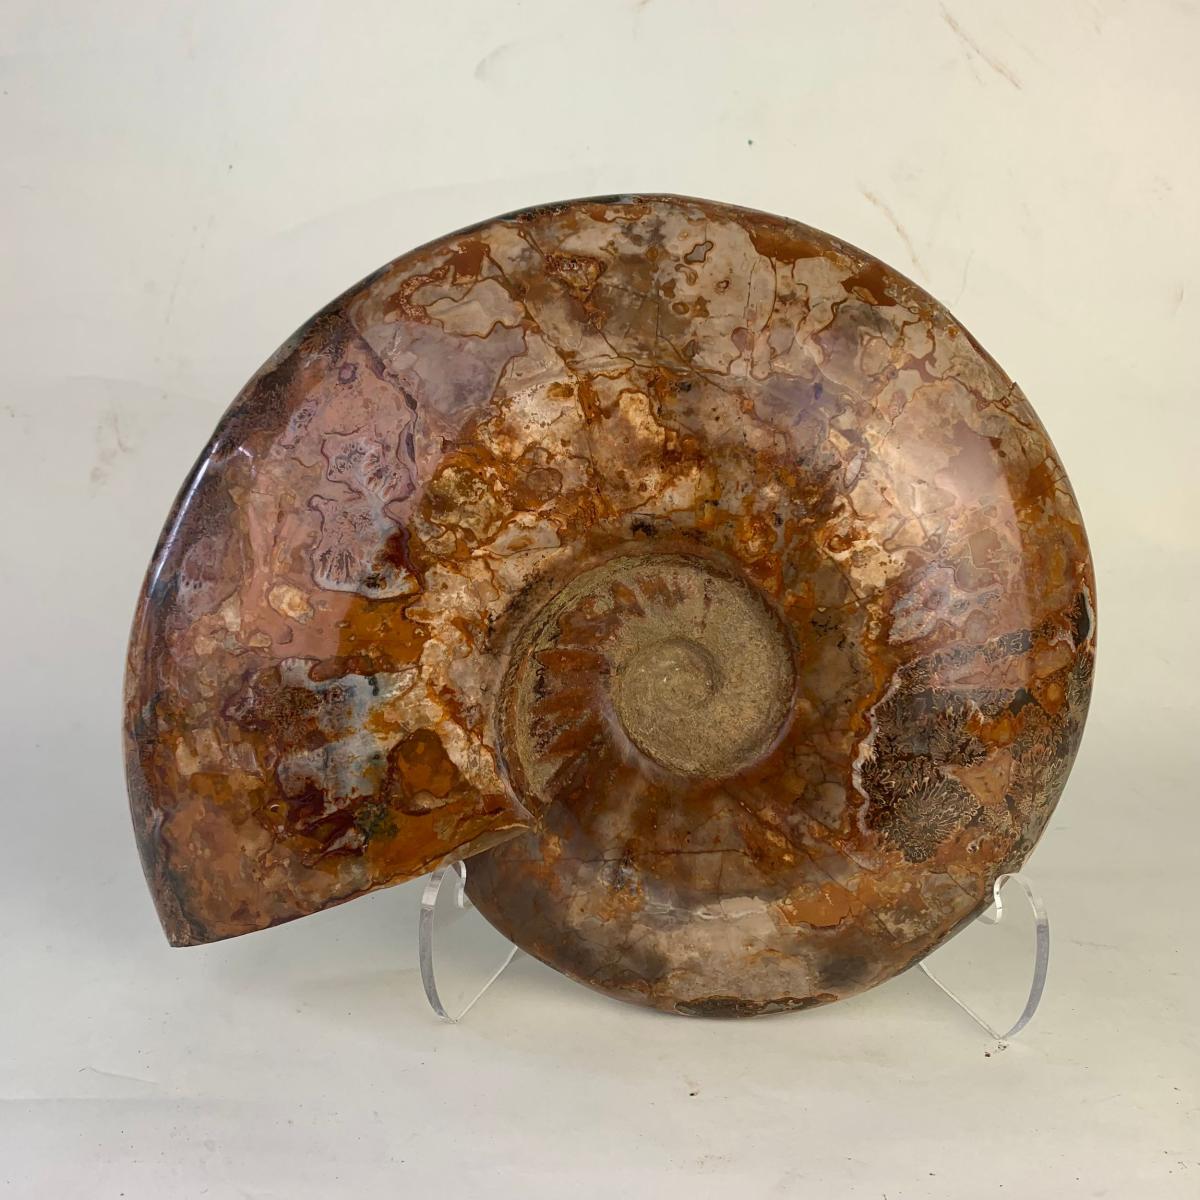 Large whole Ammonite fossil